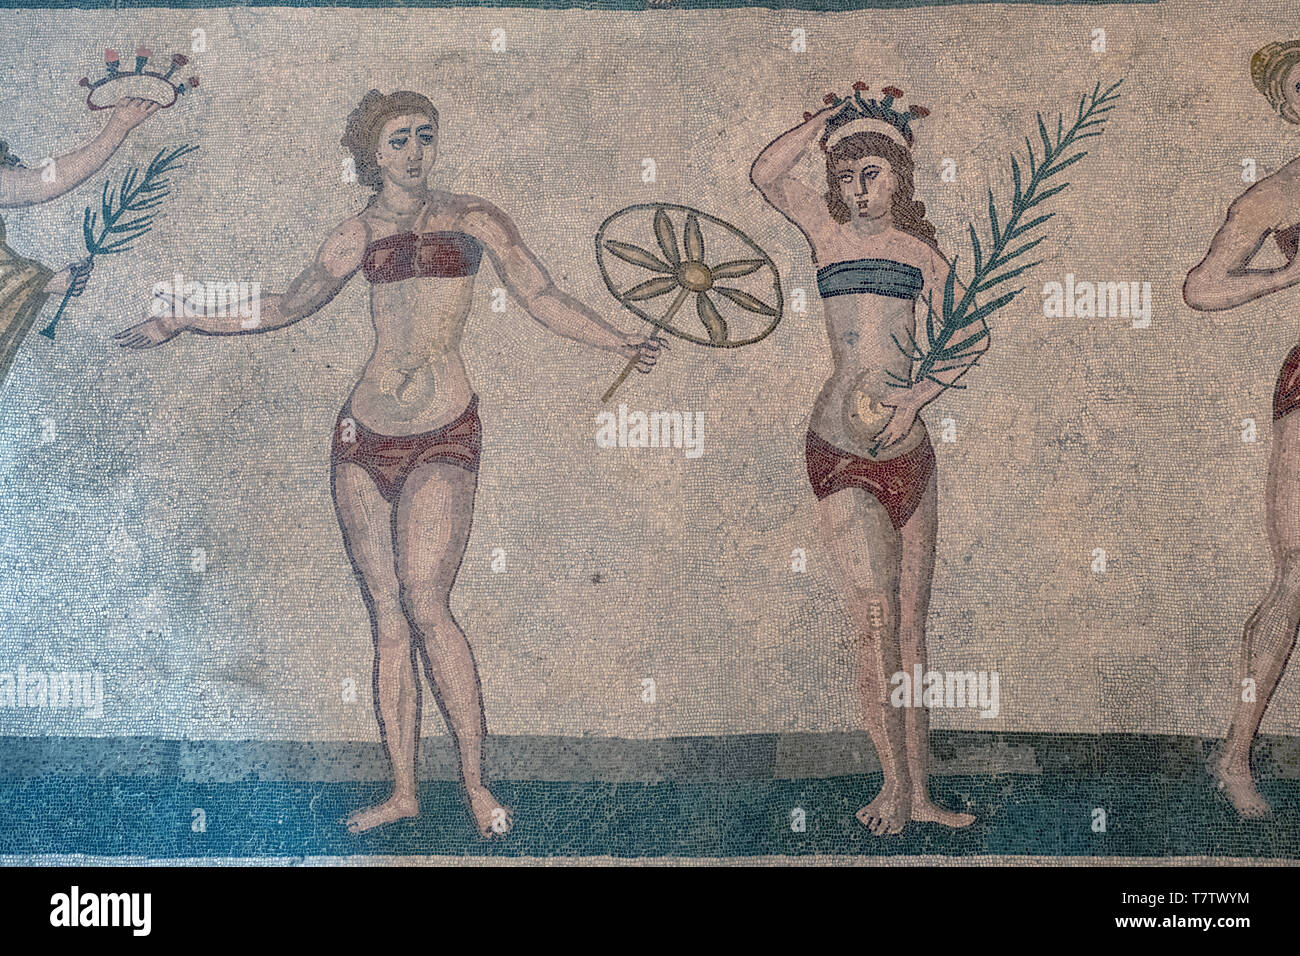 The bikini girls mosaic, showing athletic women playing sports, roman mosaic in the Villa Romana del Casale, Piazza Armerina, Sicily, Italy. Stock Photo